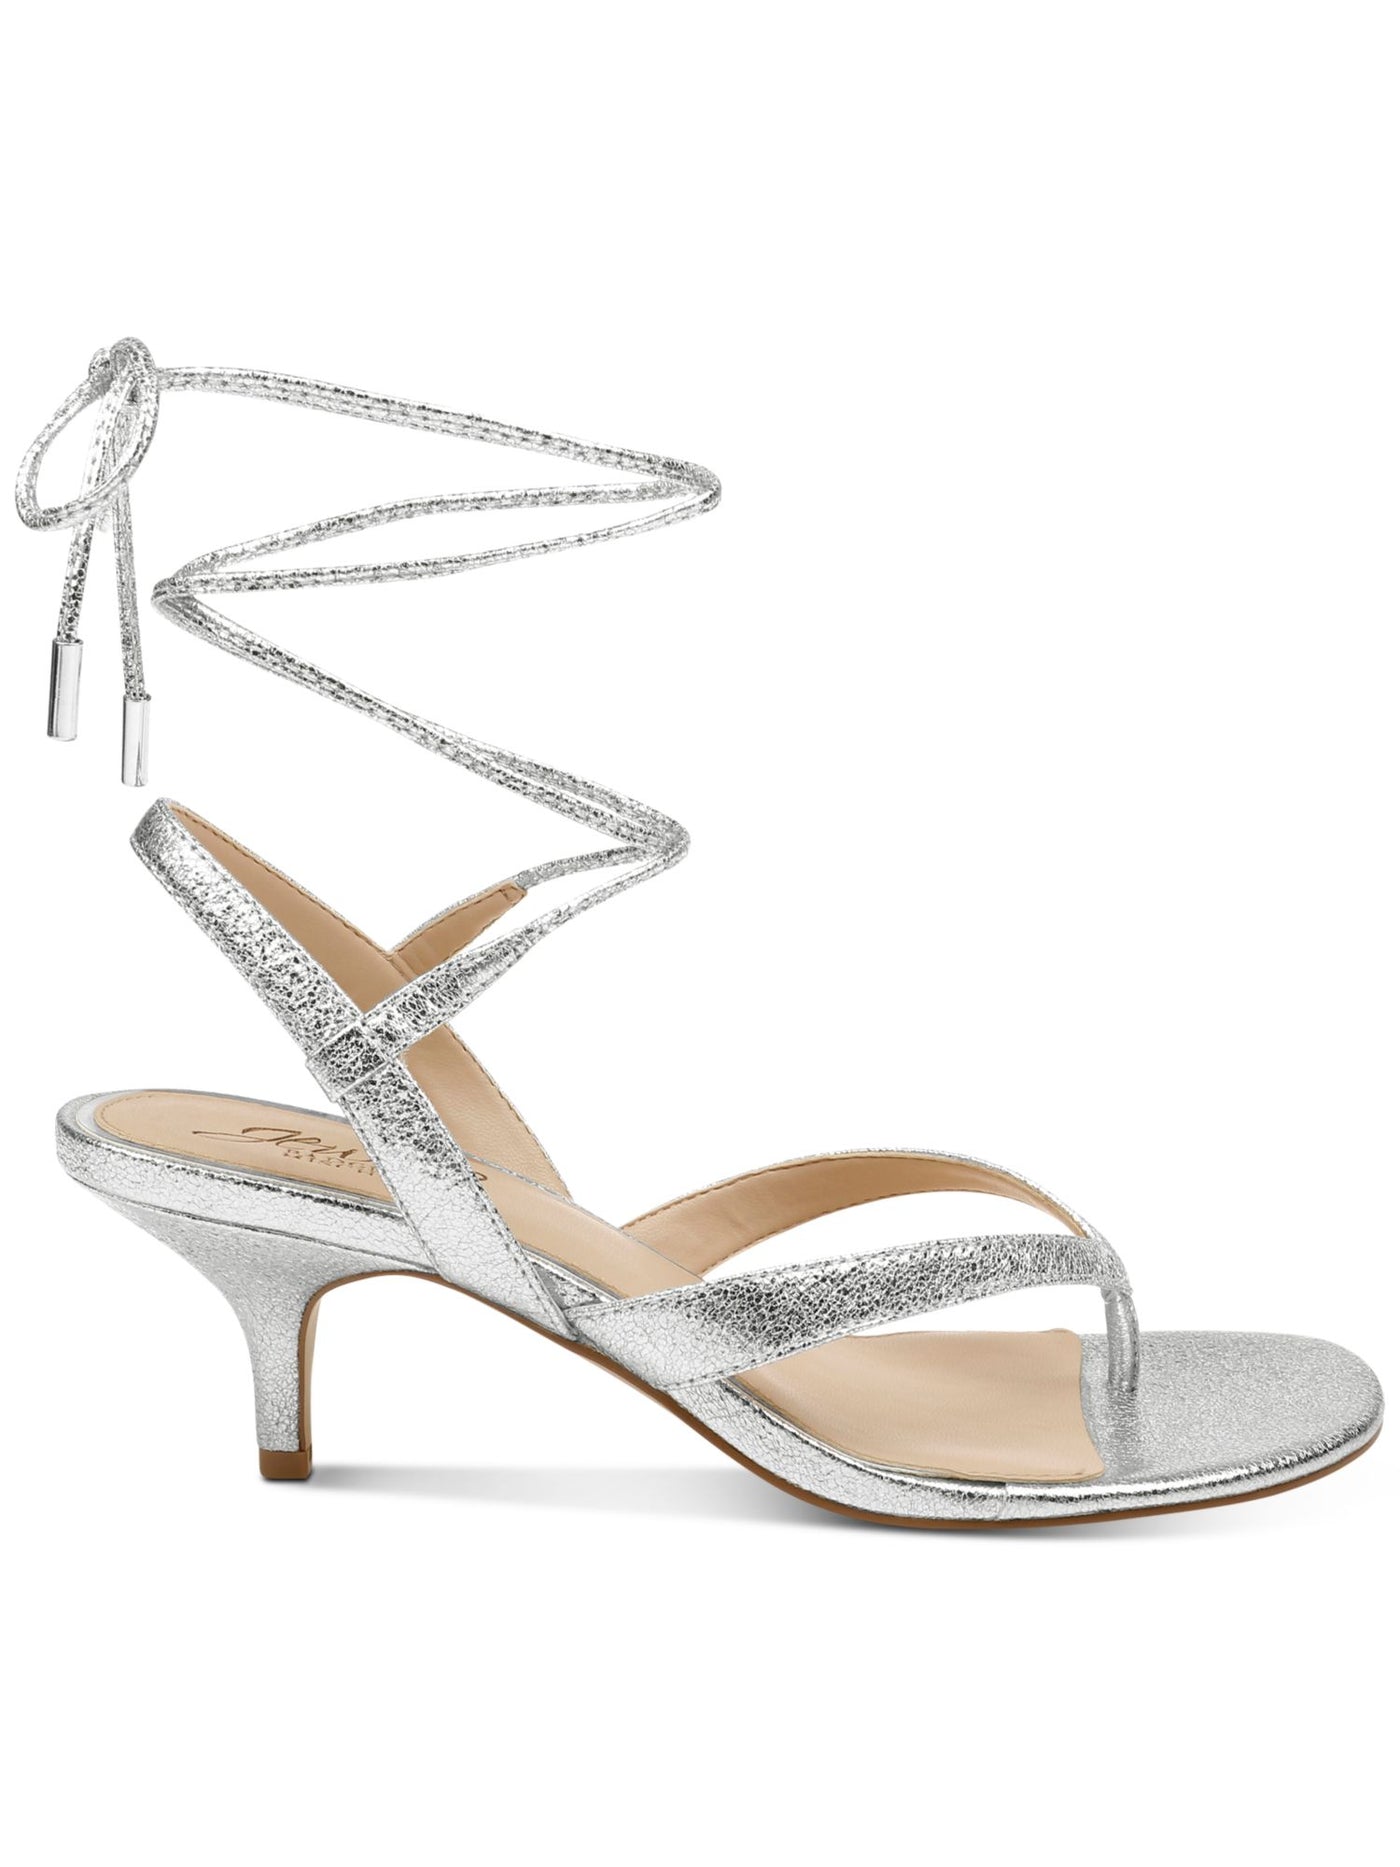 JEWEL BADGLEY MISCHKA Womens Silver Cushioned Metallic Open Toe Kitten Heel Lace-Up Dress Thong Sandals Shoes 7